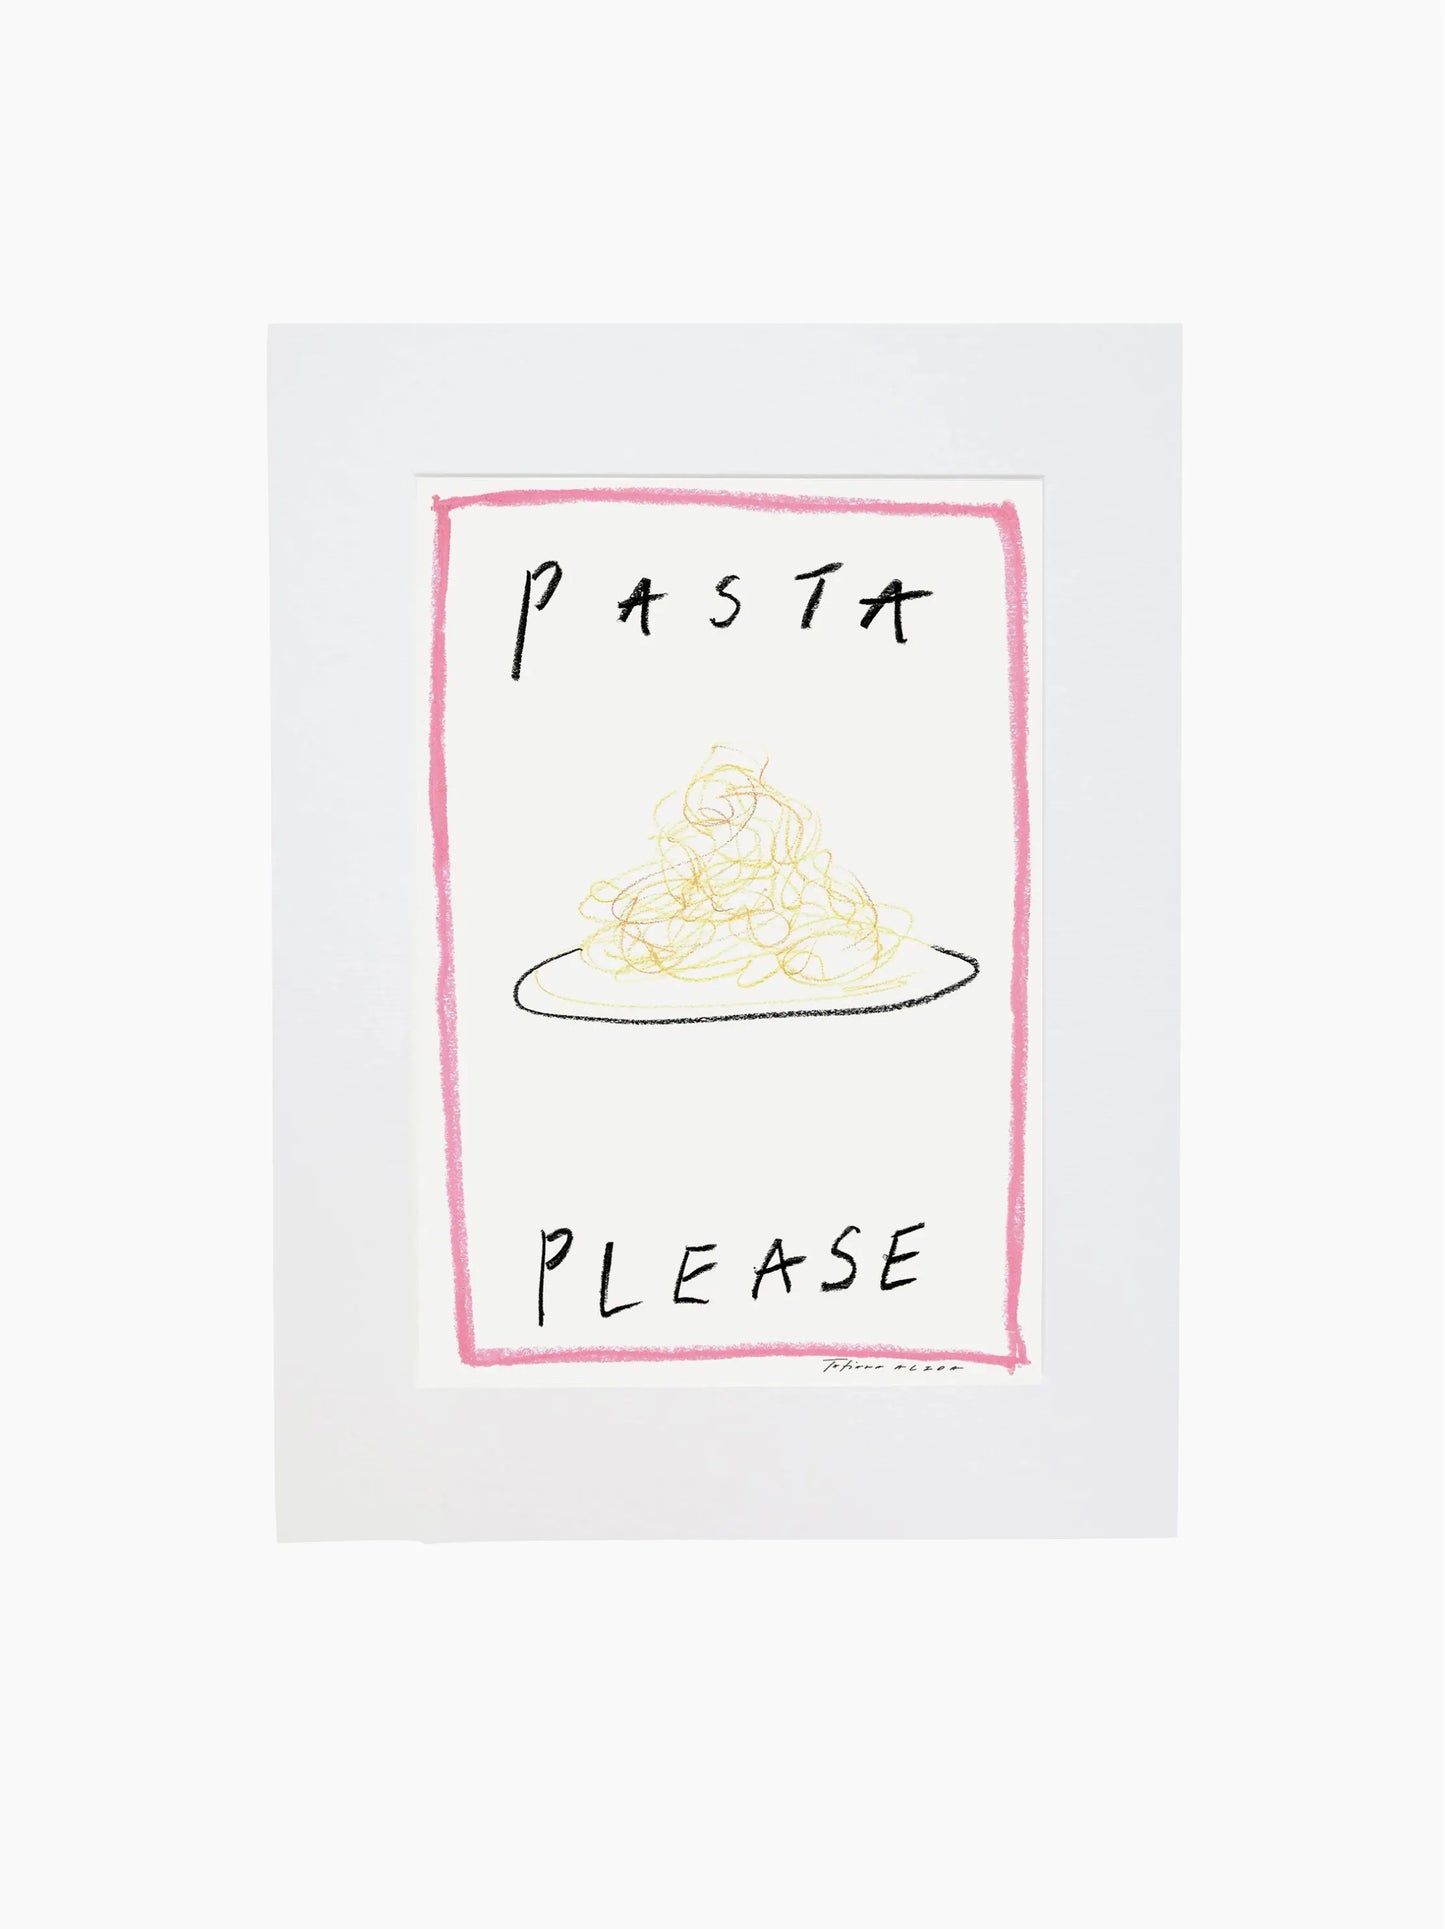 Pasta Please Art Print